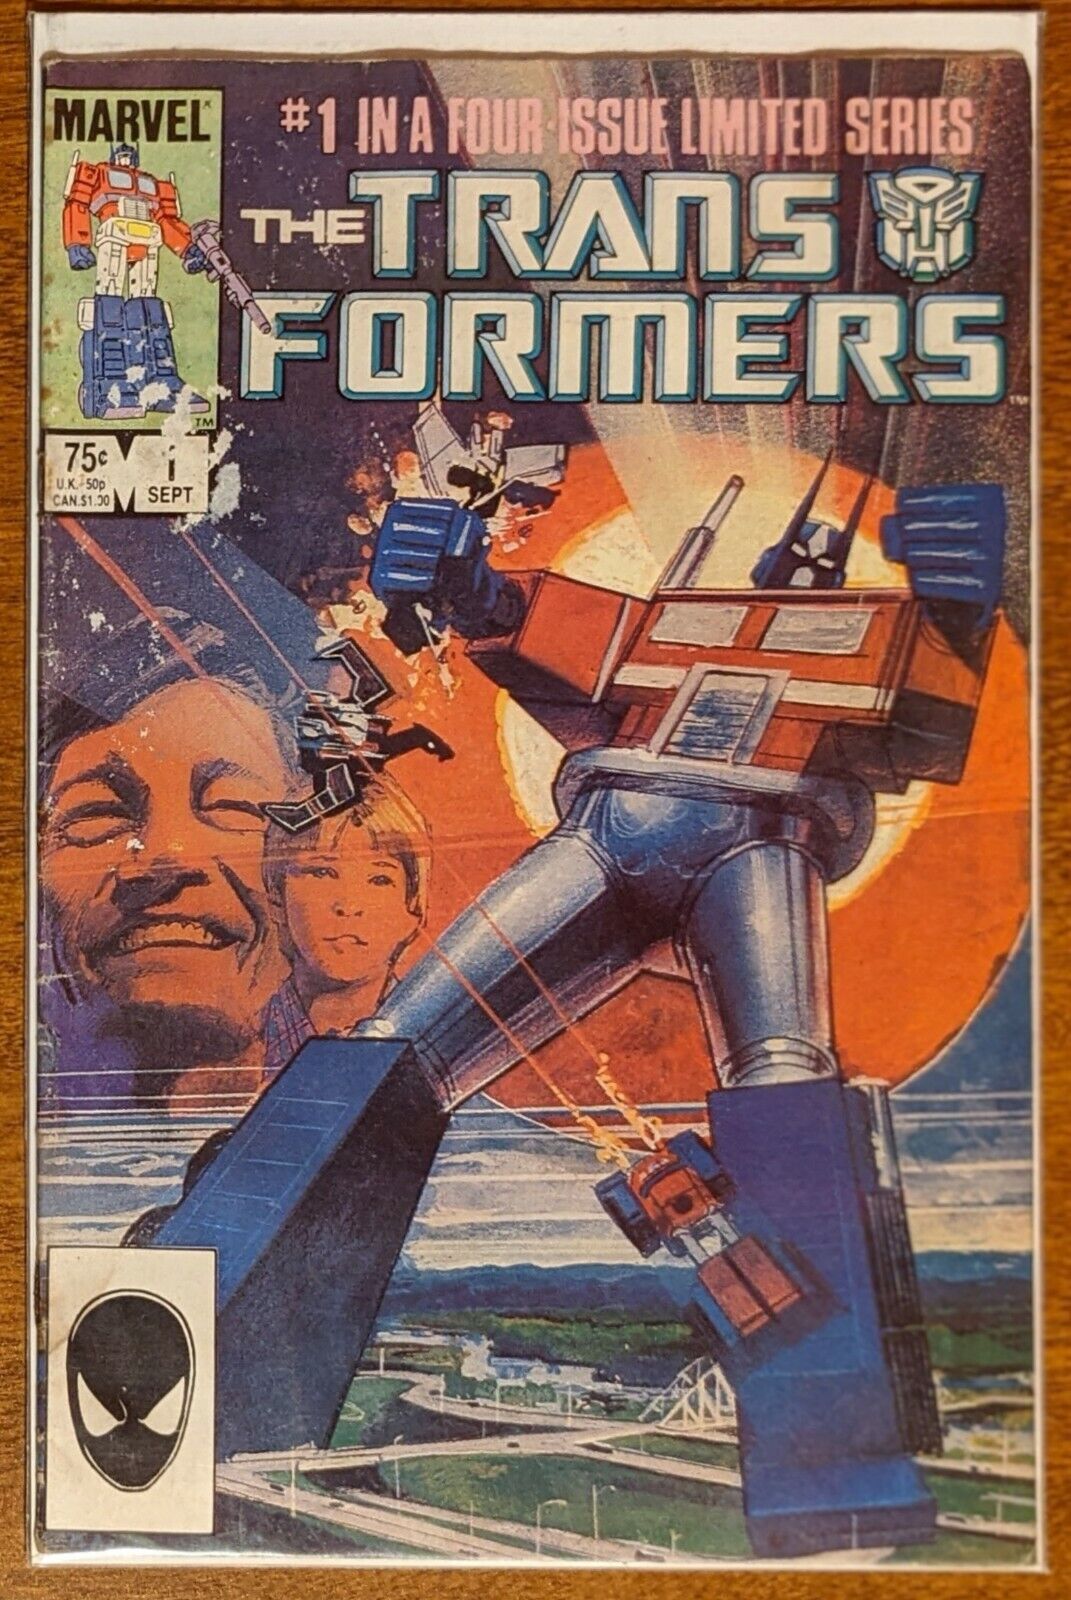 TRANSFORMERS Vol 1 #1 (Marvel Comics, 1984) Optimus Prime